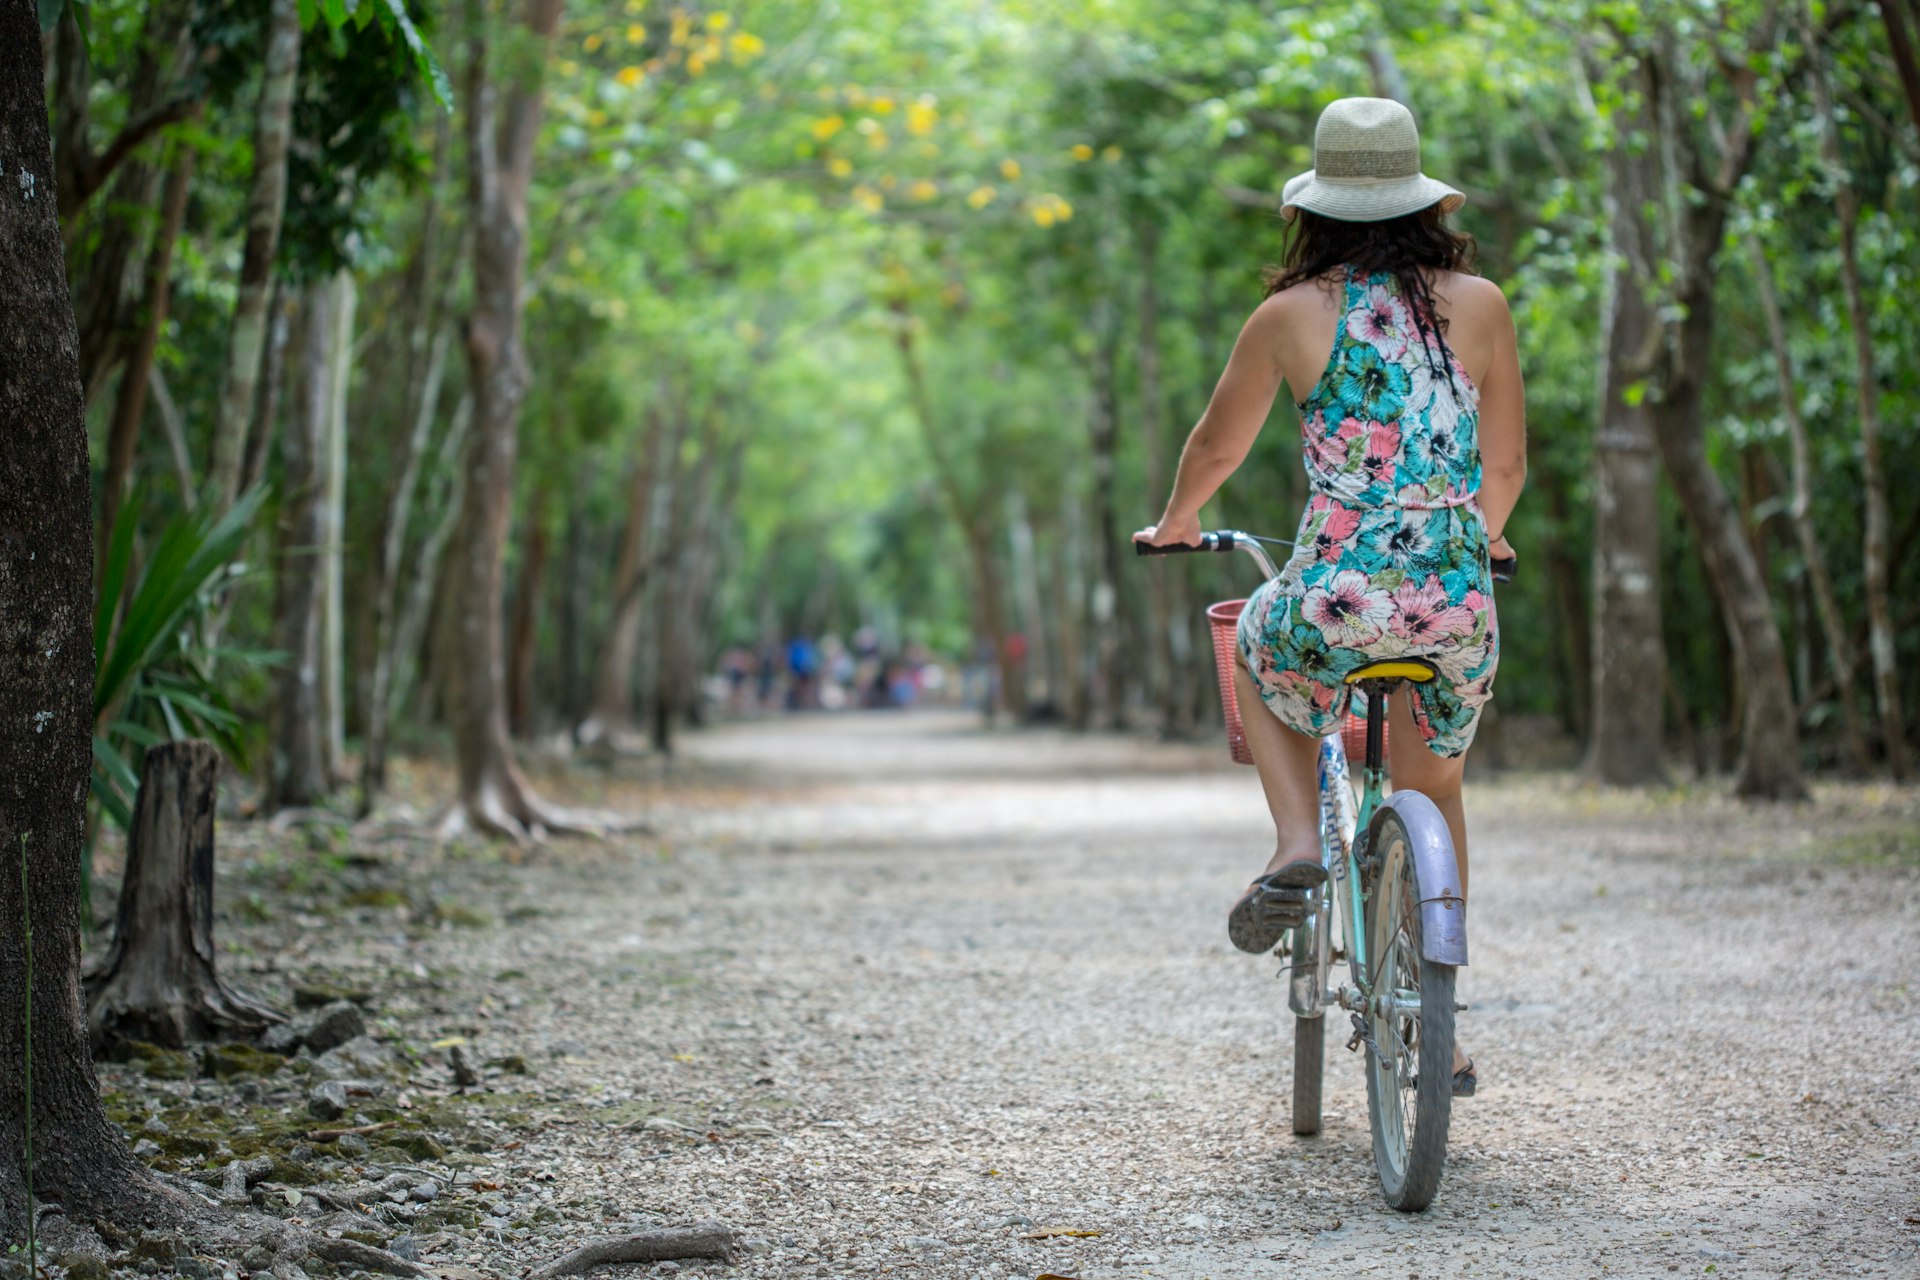 A woman rides a bike down a tree-lined path